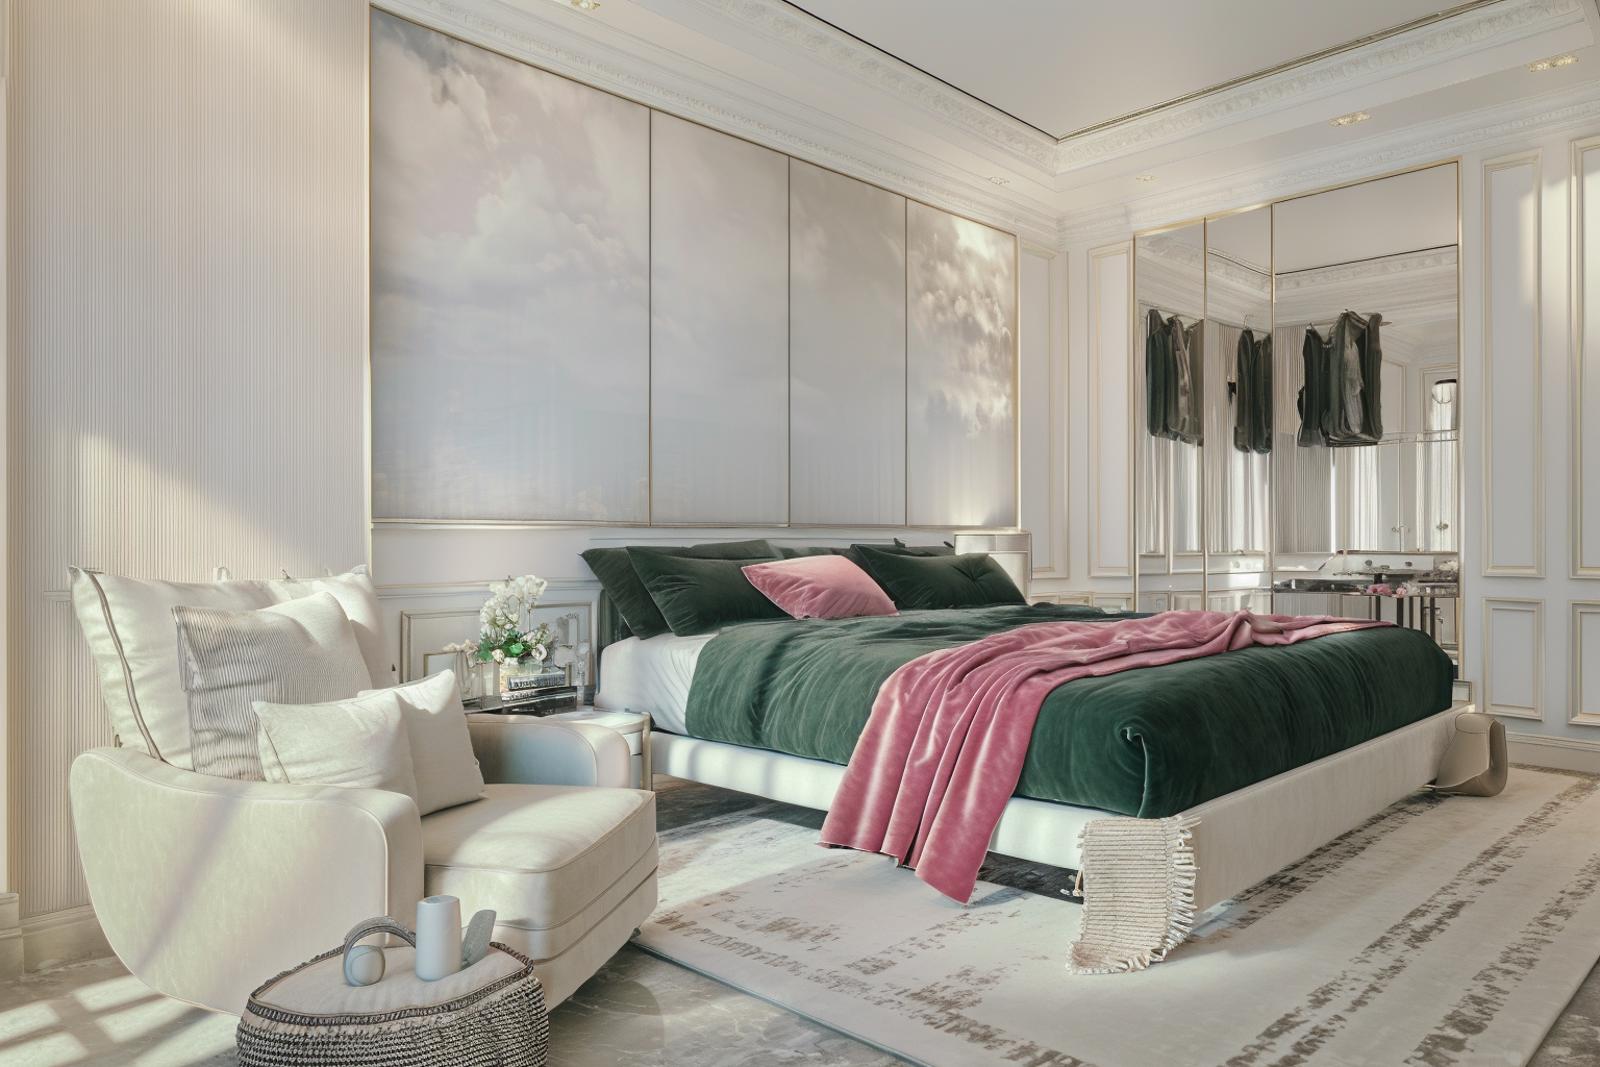 JJ's Interior Space - Luxury Bedroom image by jjhuang